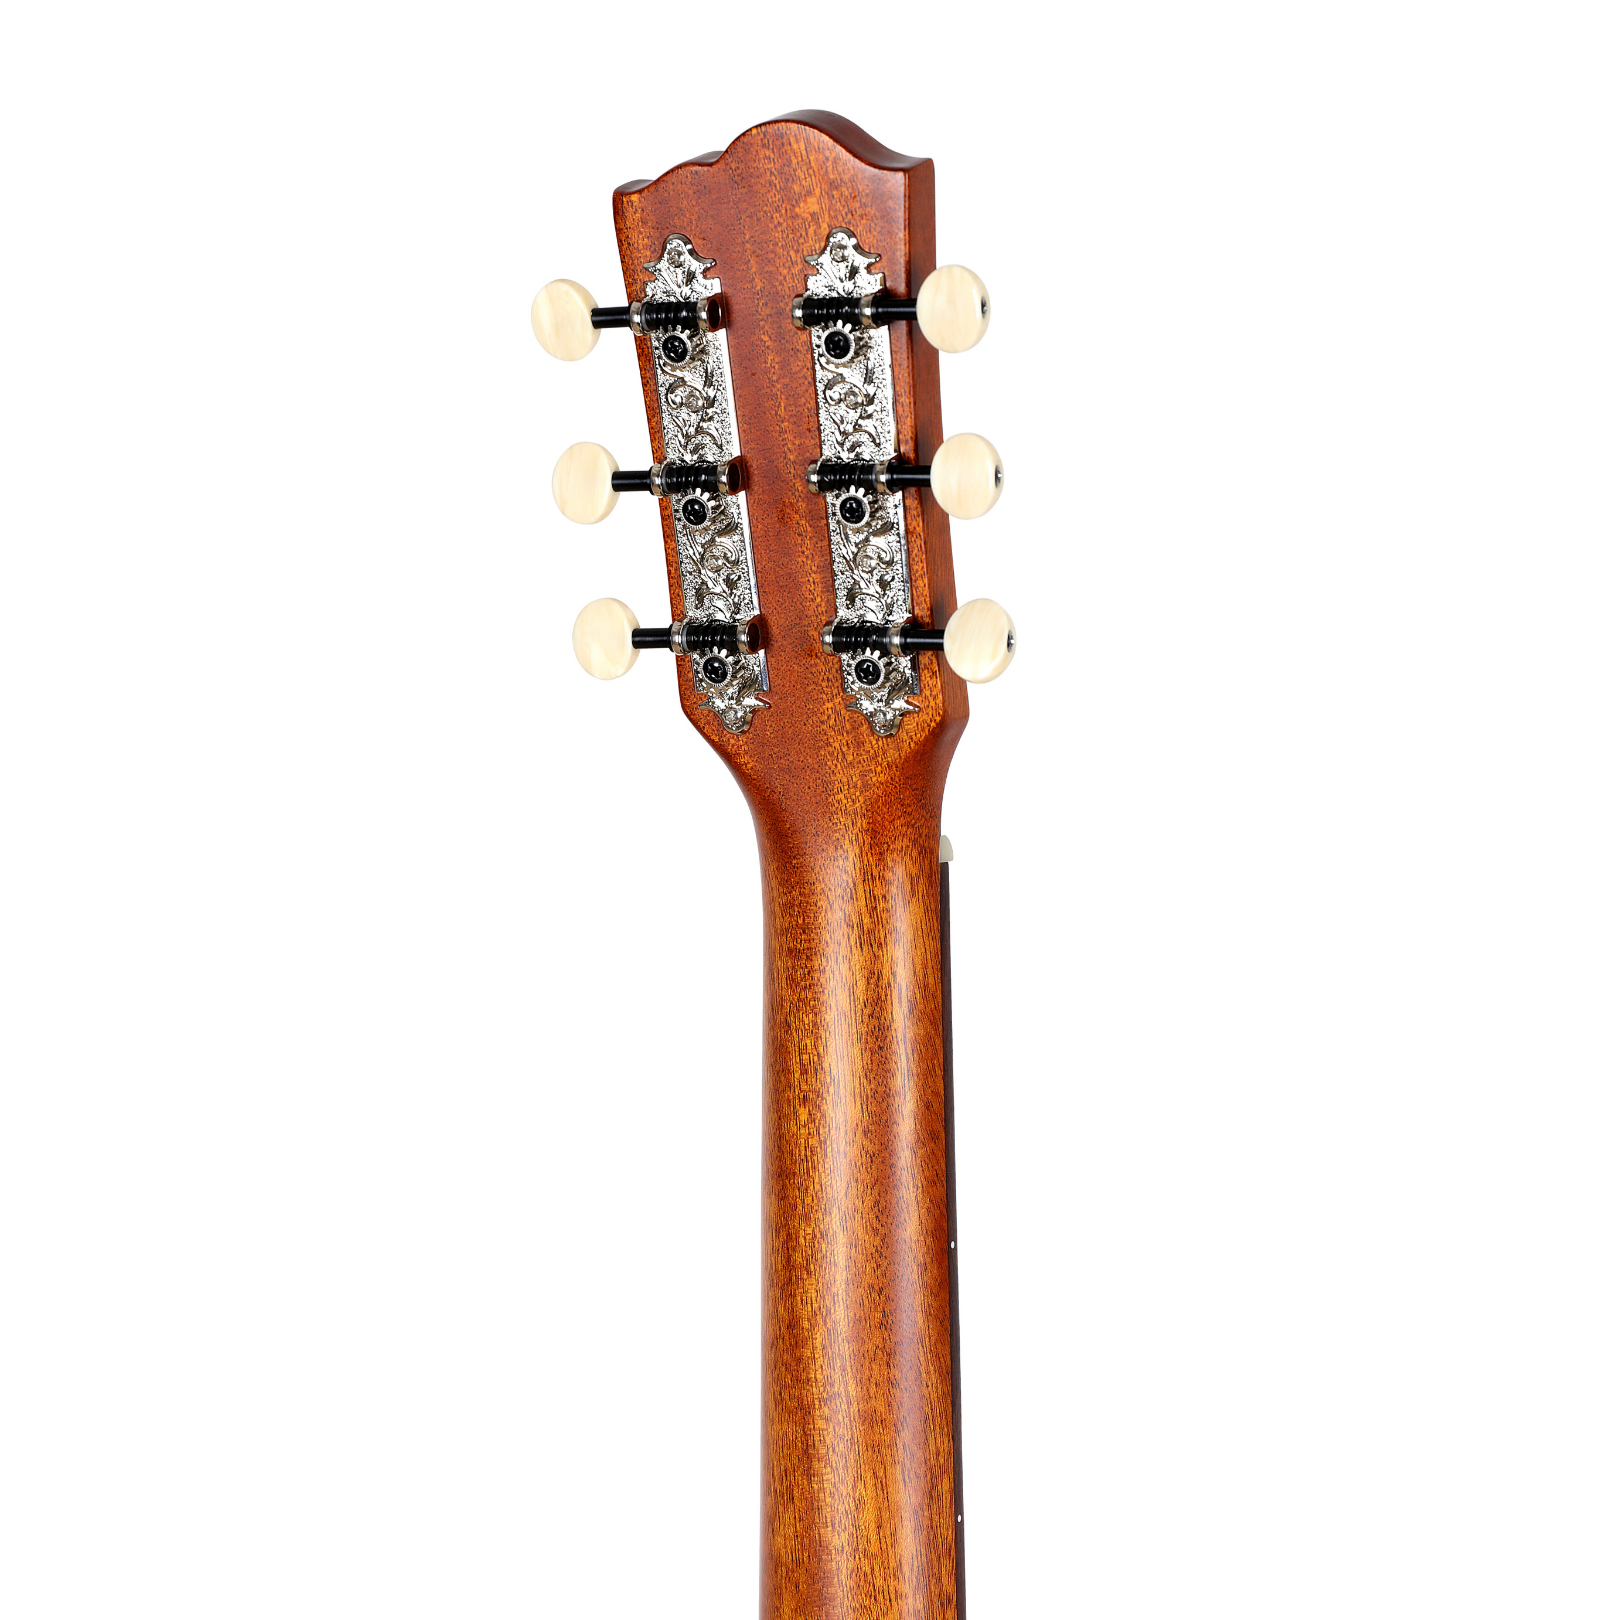 Enya T05-J 41" Tribute Series Sitka Spruce Solid Top Jumbo Acoustic Guitar With Hardcase | ENYA , Zoso Music